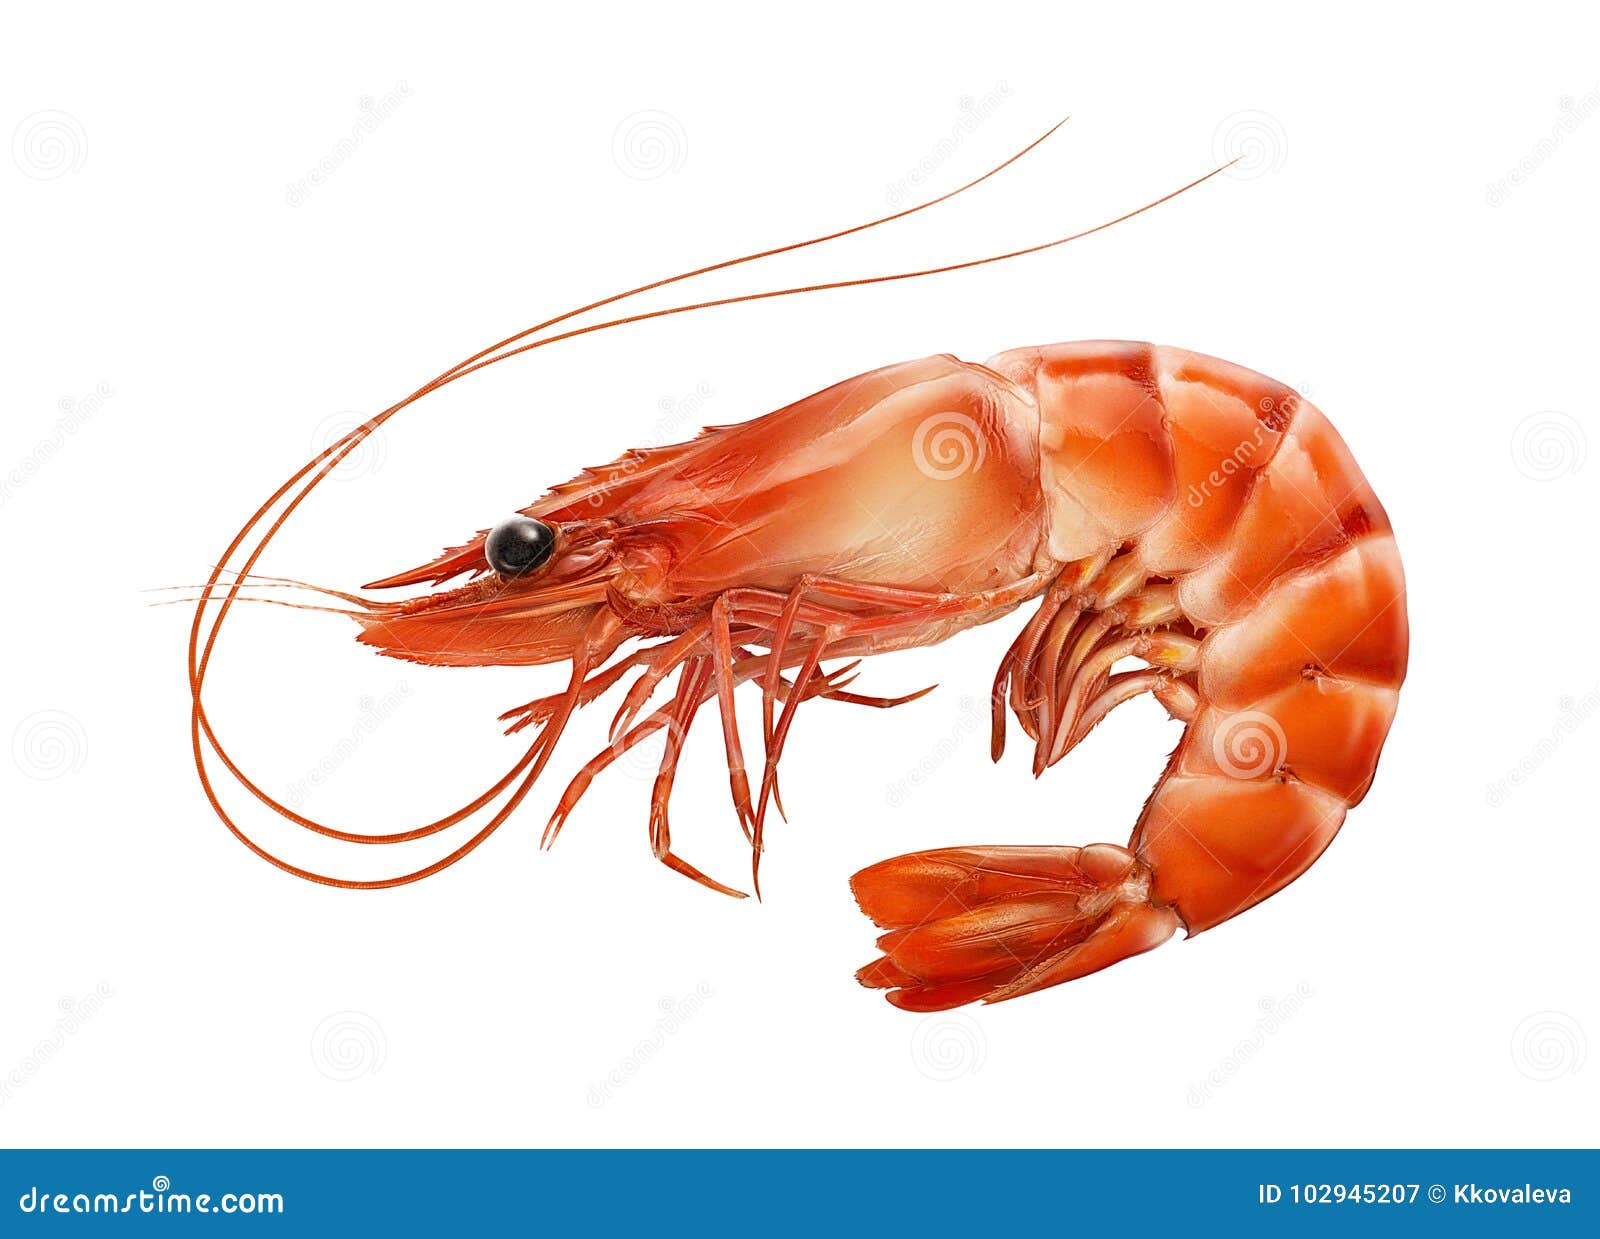 red boiled prawn or tiger shrimp  on white background